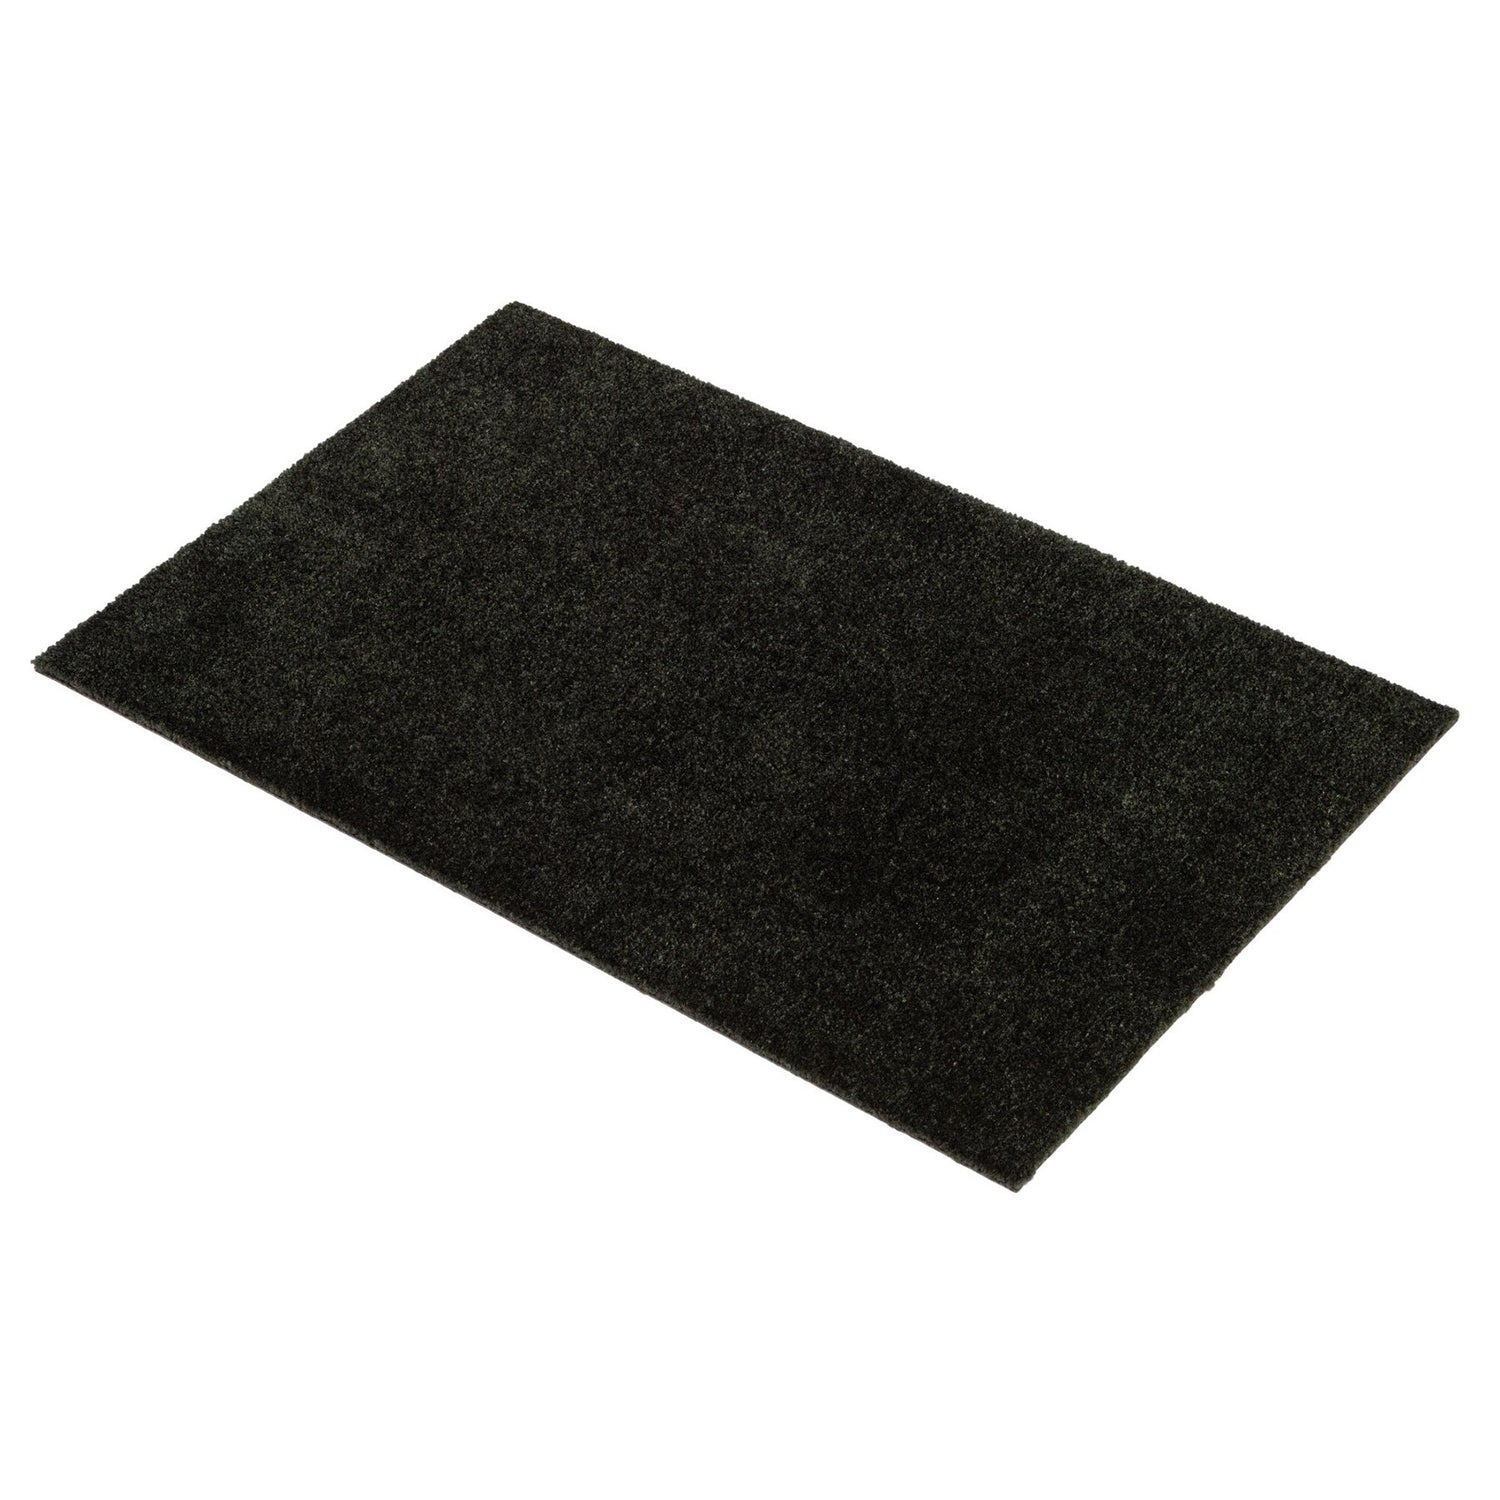 Floor mat 40 x 60 cm - Uni Color/Dark Green